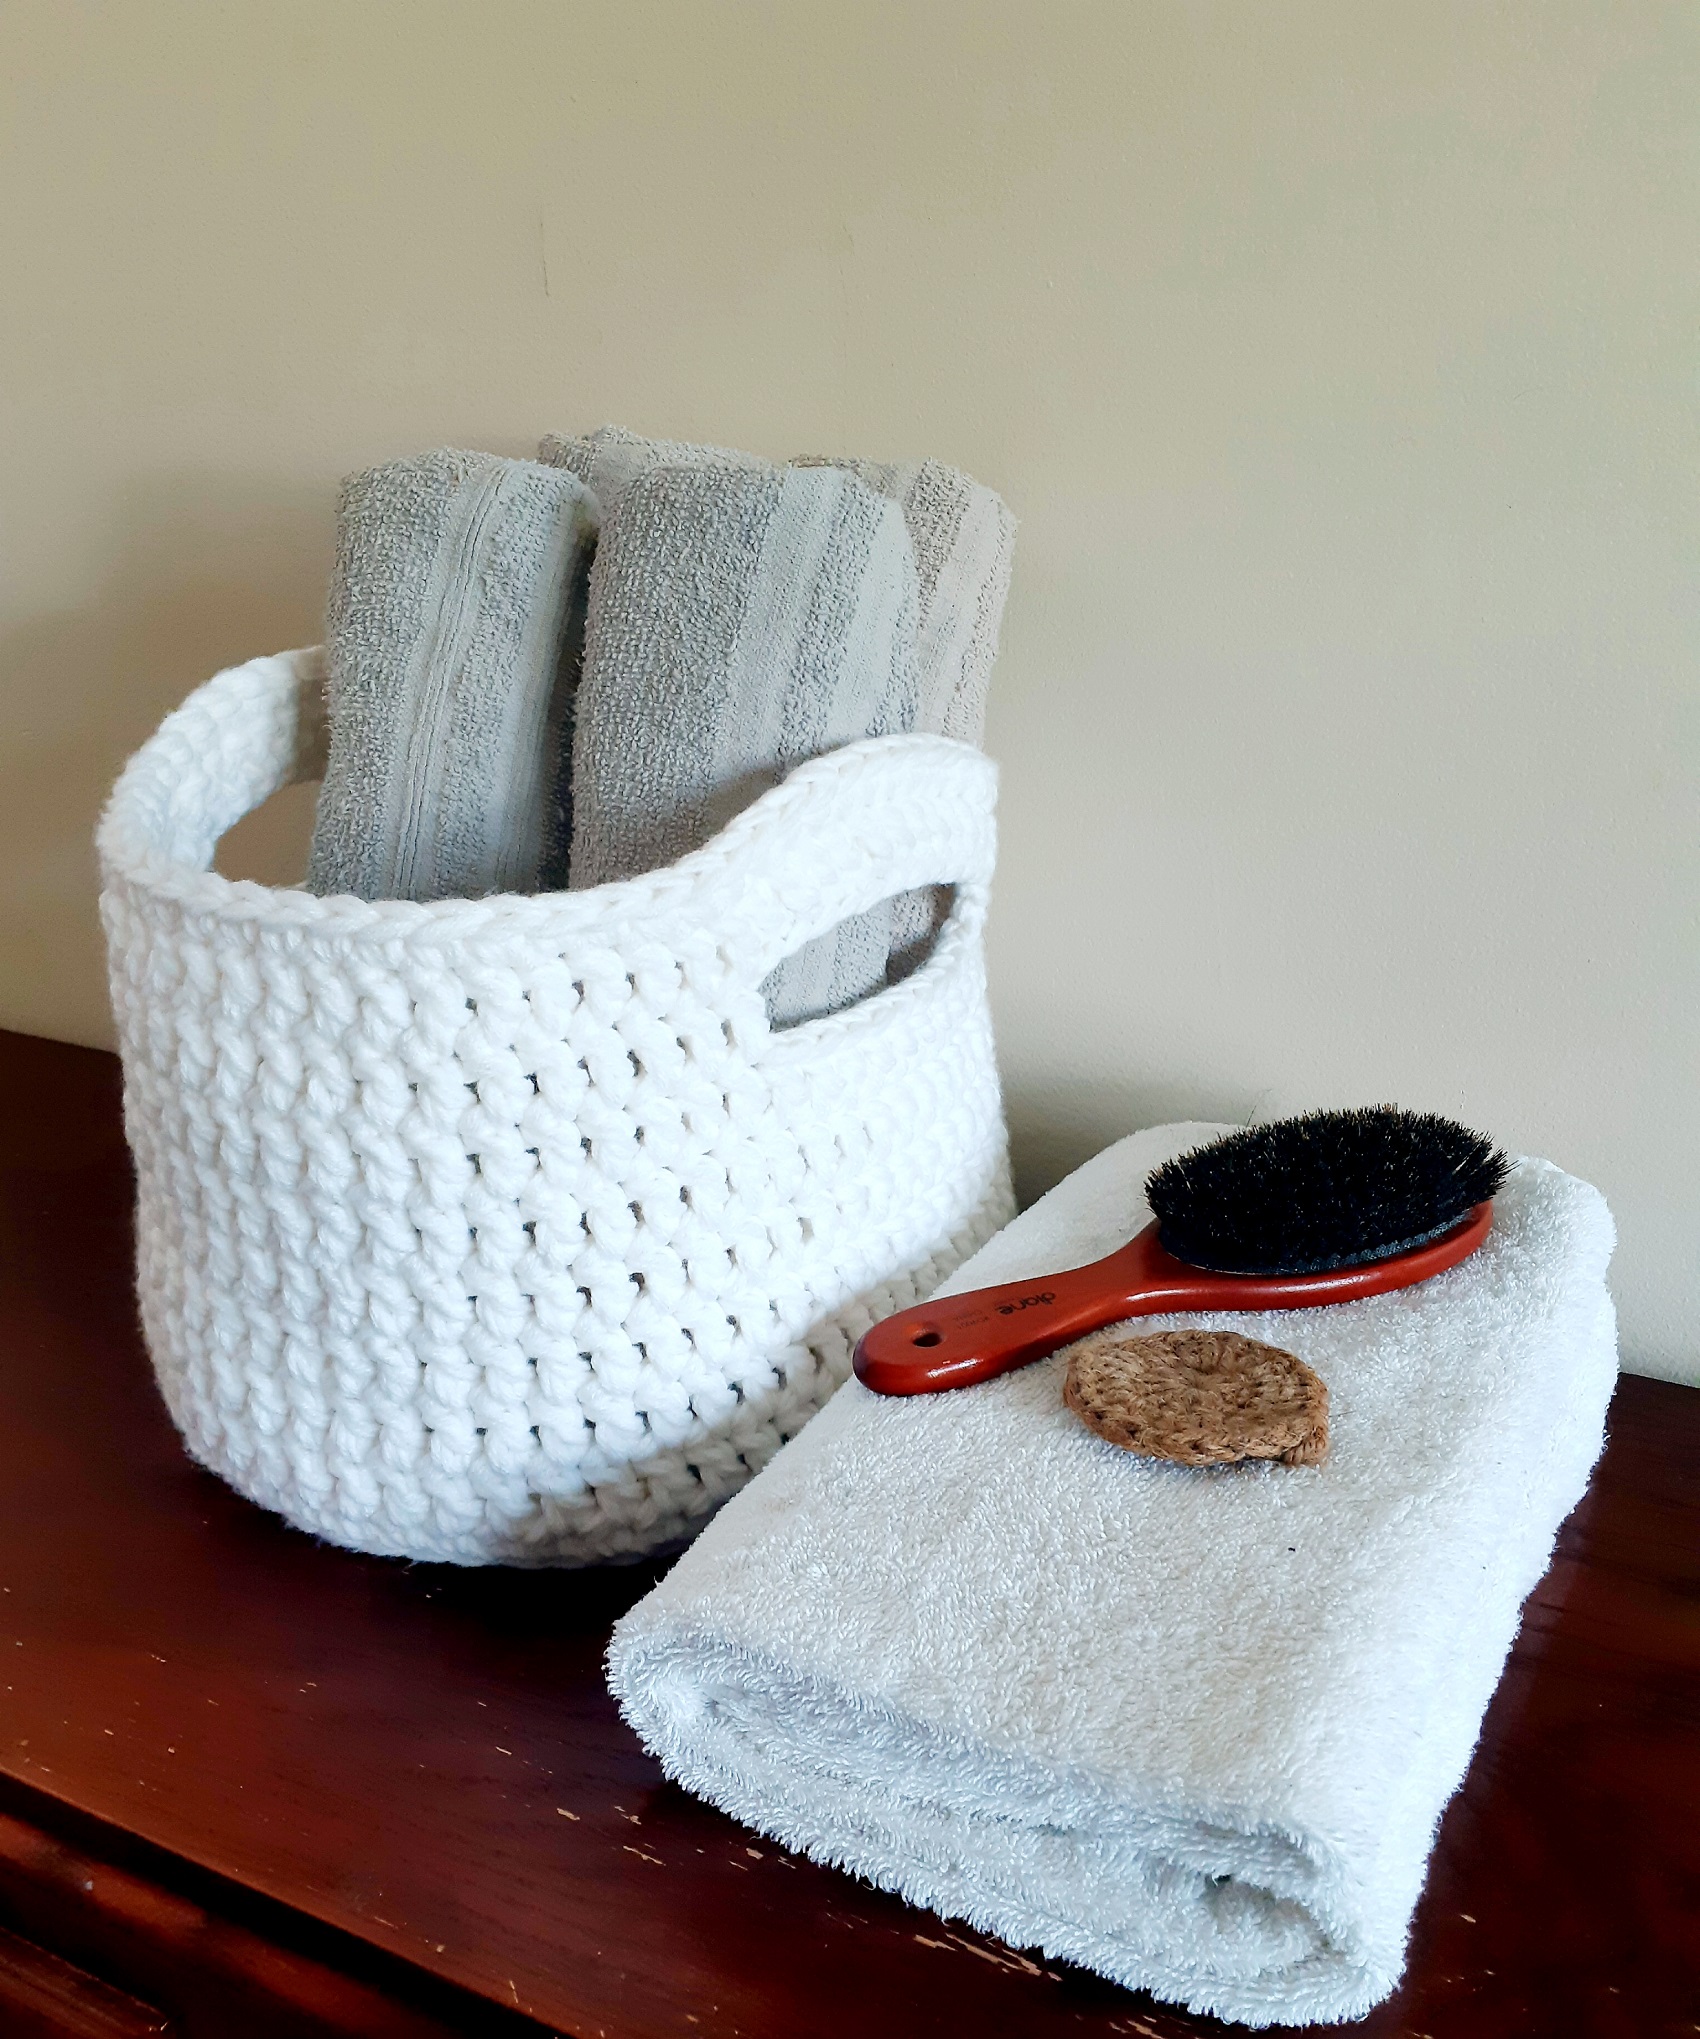 Large Crochet Basket with Handles - Free Crochet Pattern - Persia Lou